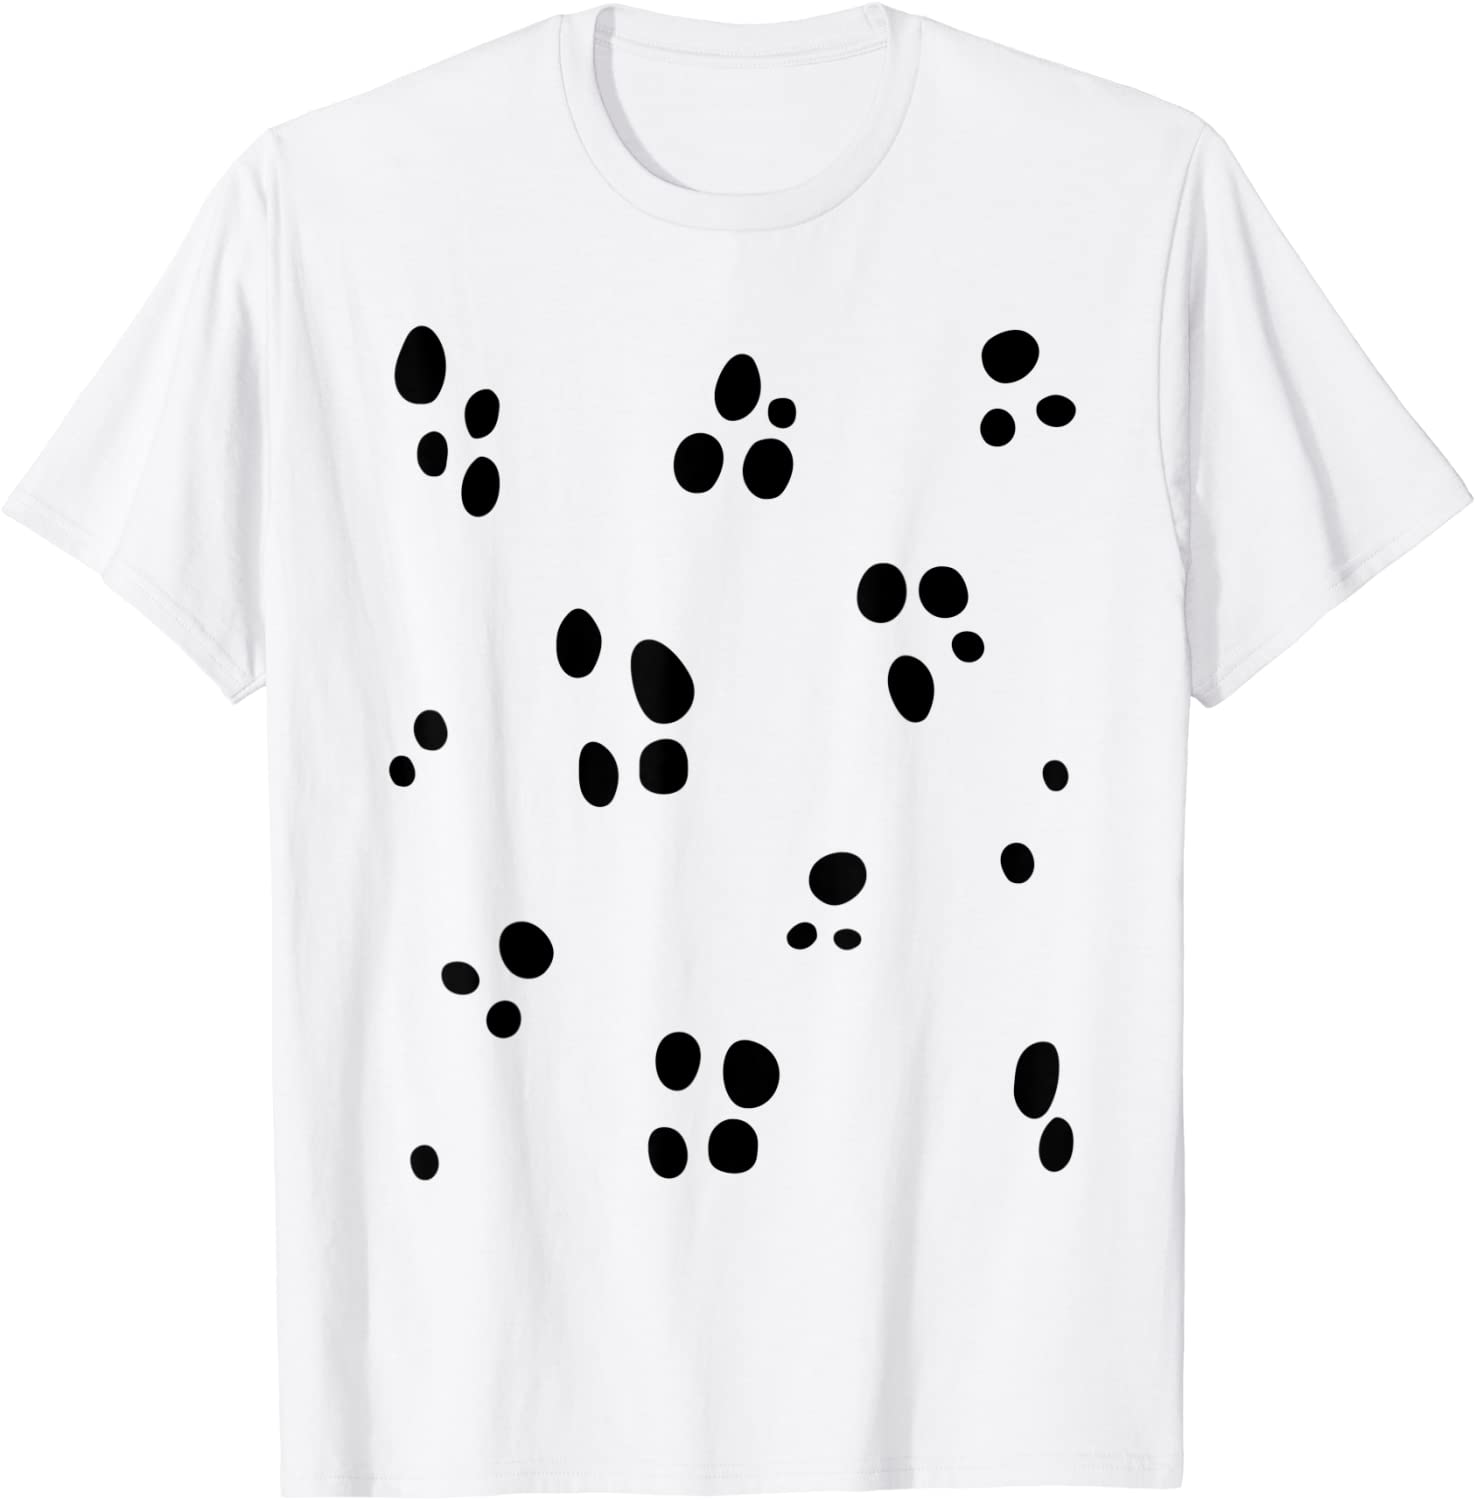 The Dalmatian Dog Print Costume T-Shirt